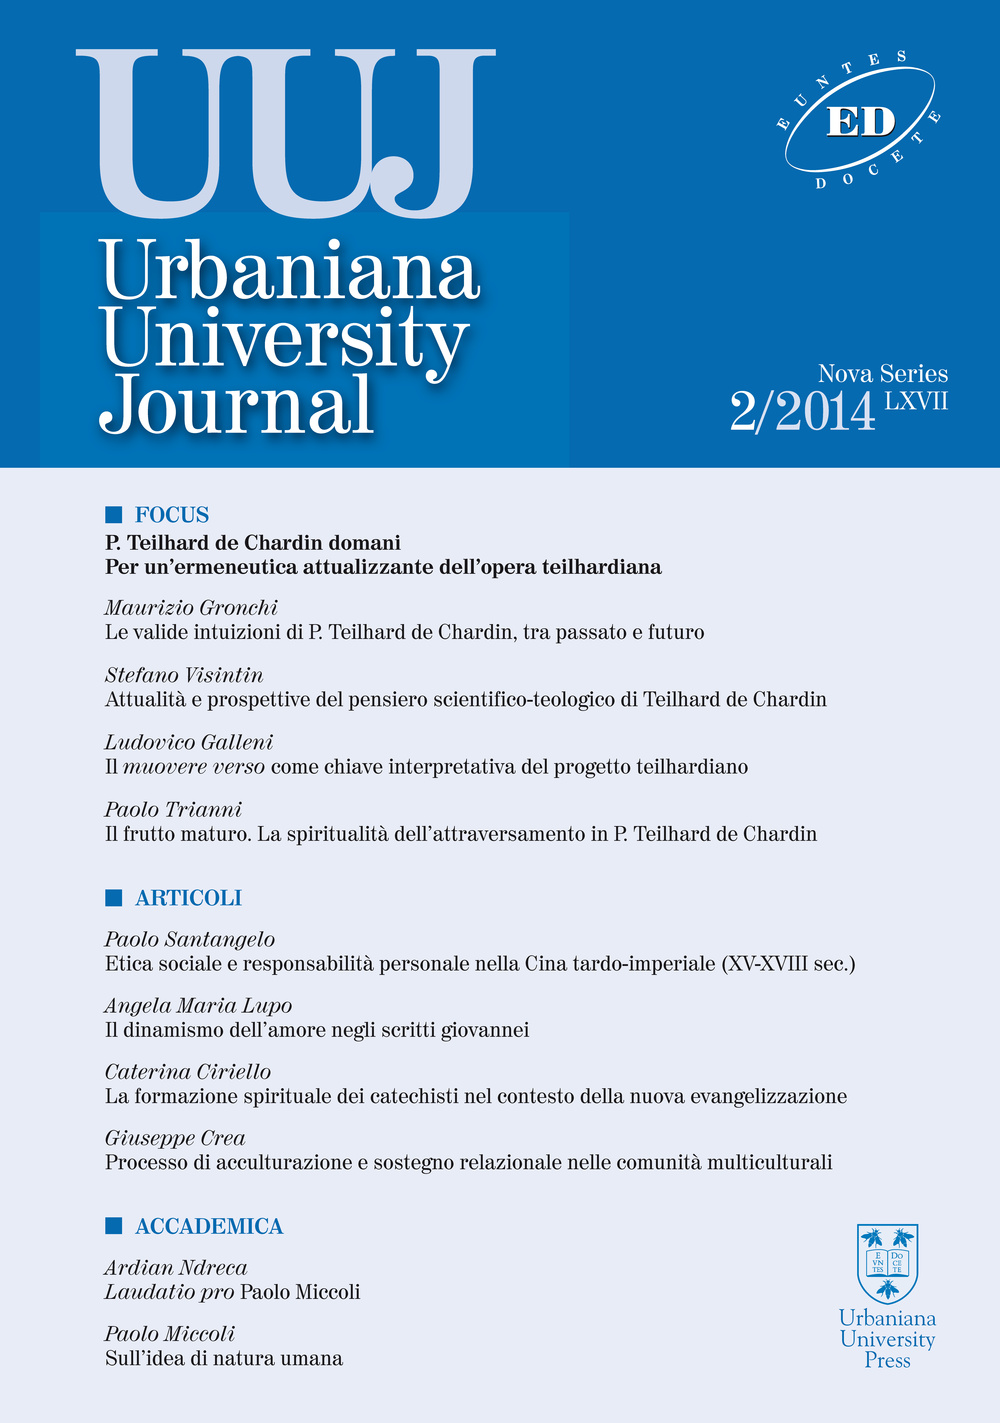 Urbaniana University Journal. Euntes Docete (2014). Vol. 2: Focus - P. Teilhard de Chardin domani